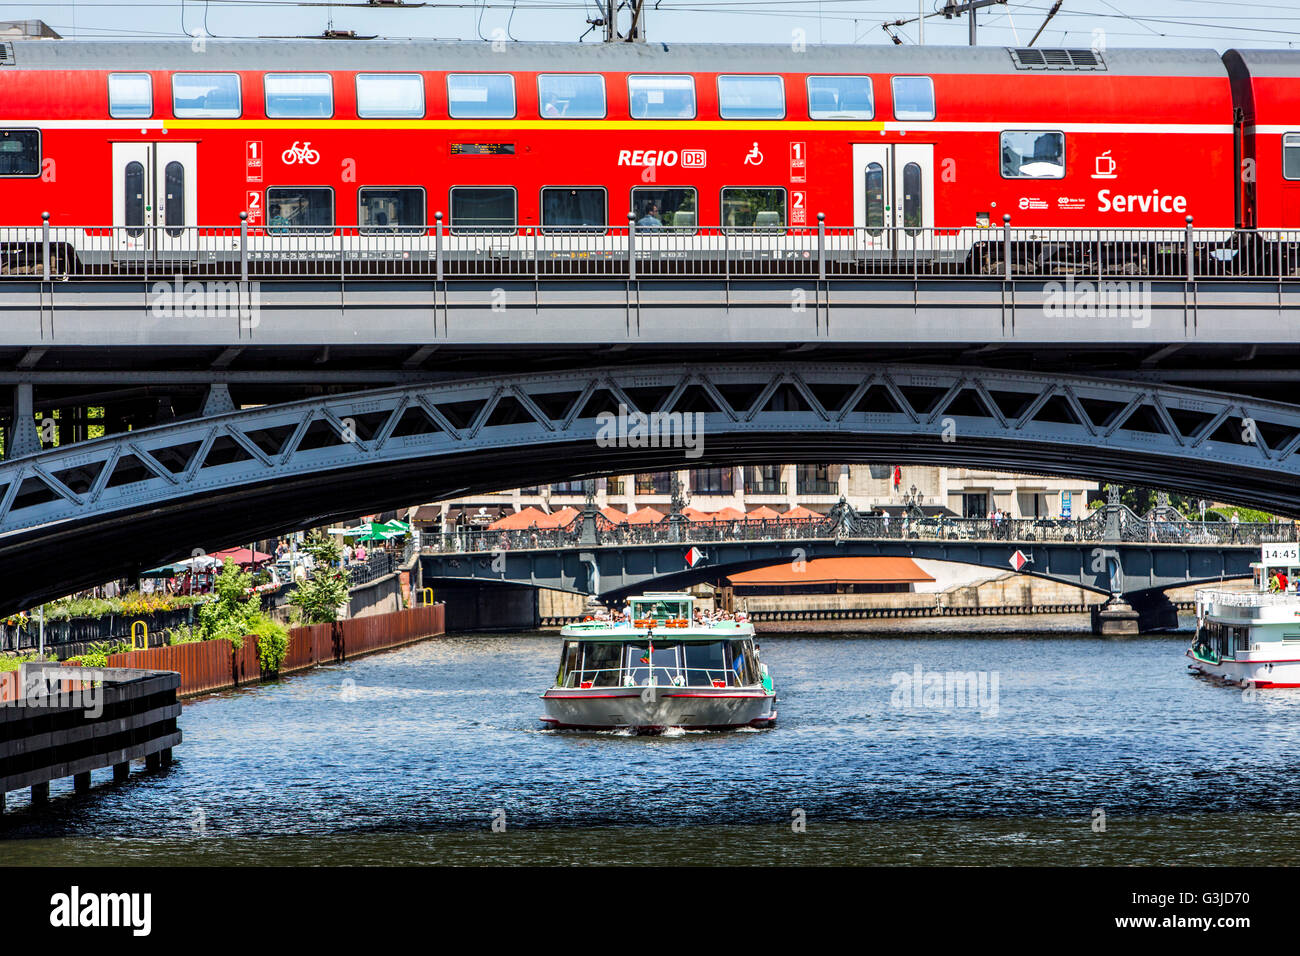 Sightseeing boat on the river Spree, Berlin, Germany, railway bridge, Stock Photo